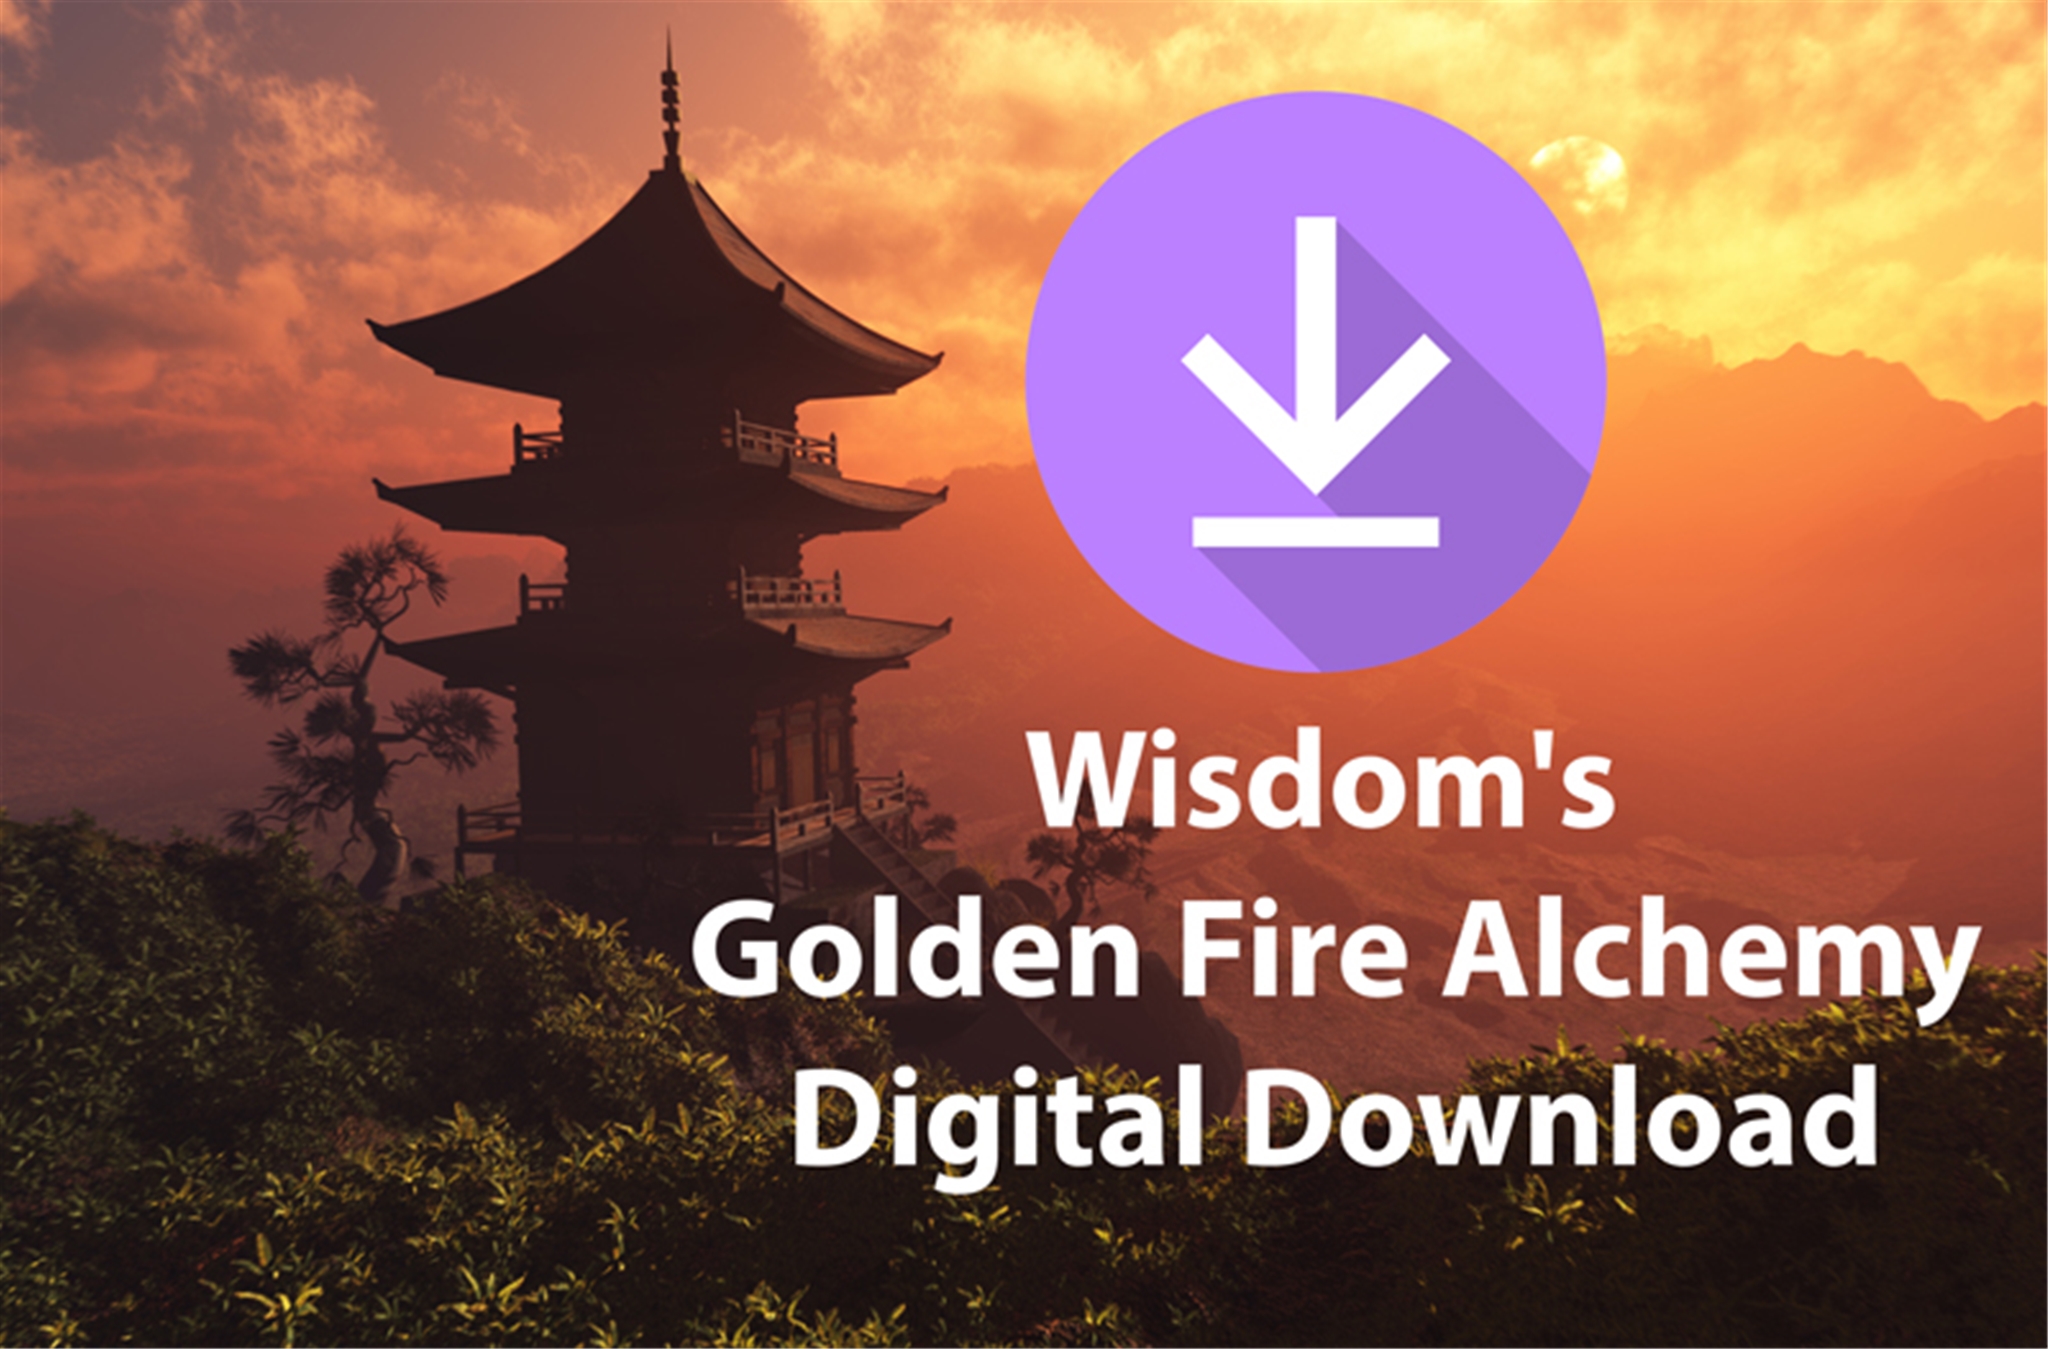 Wisdom's Golden Fire Alchemy - Digital Download